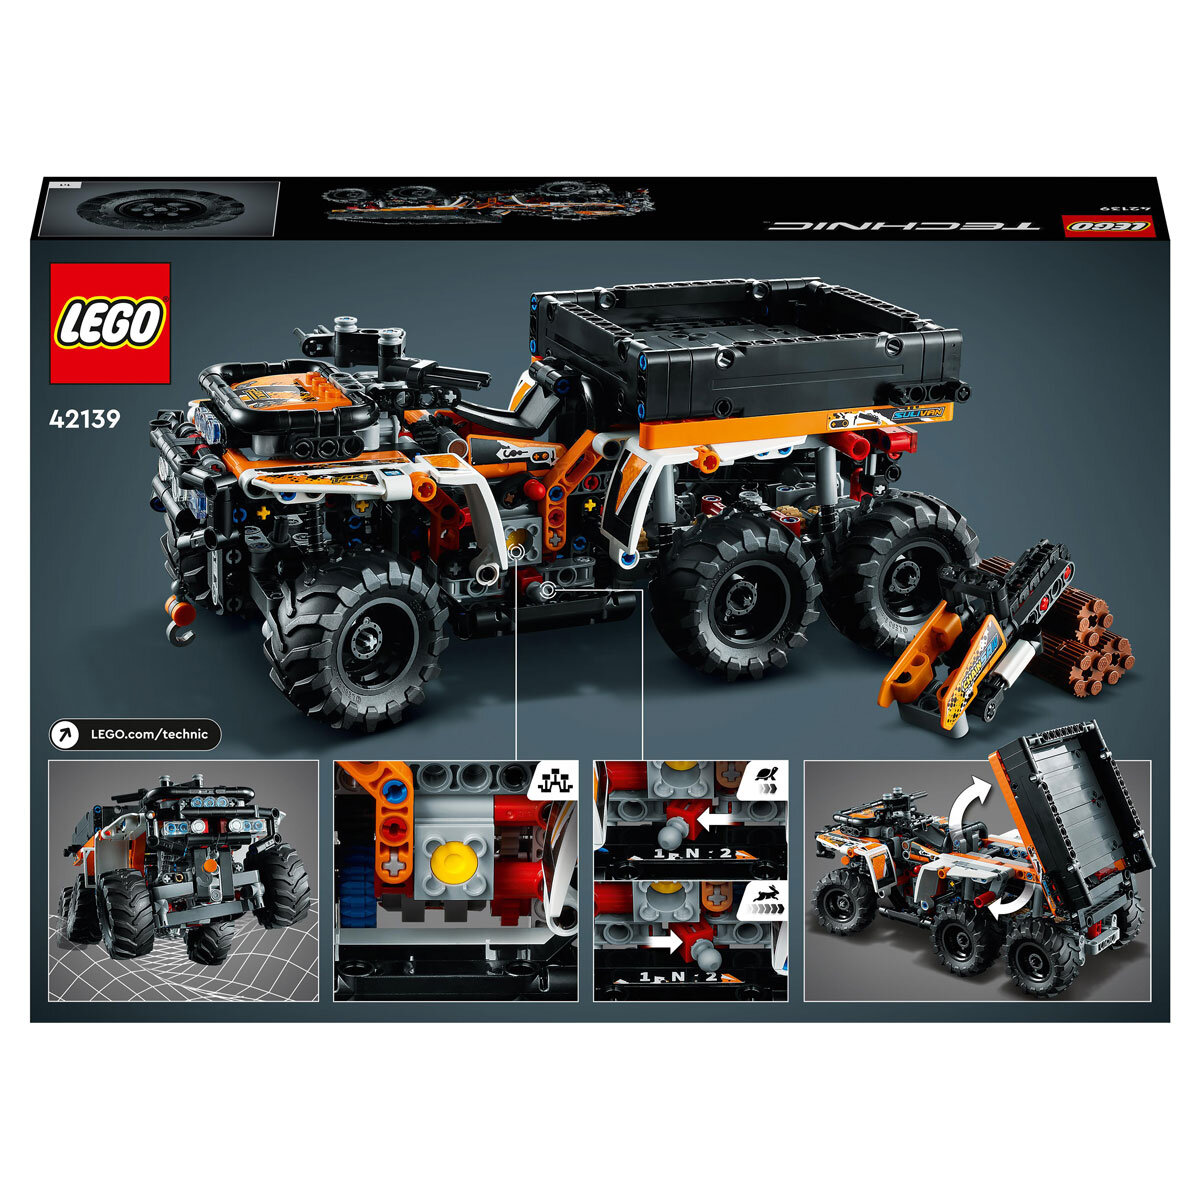 Buy LEGO Technic All-Terrain Vehicle Back of Box Image at Costco.co.uk